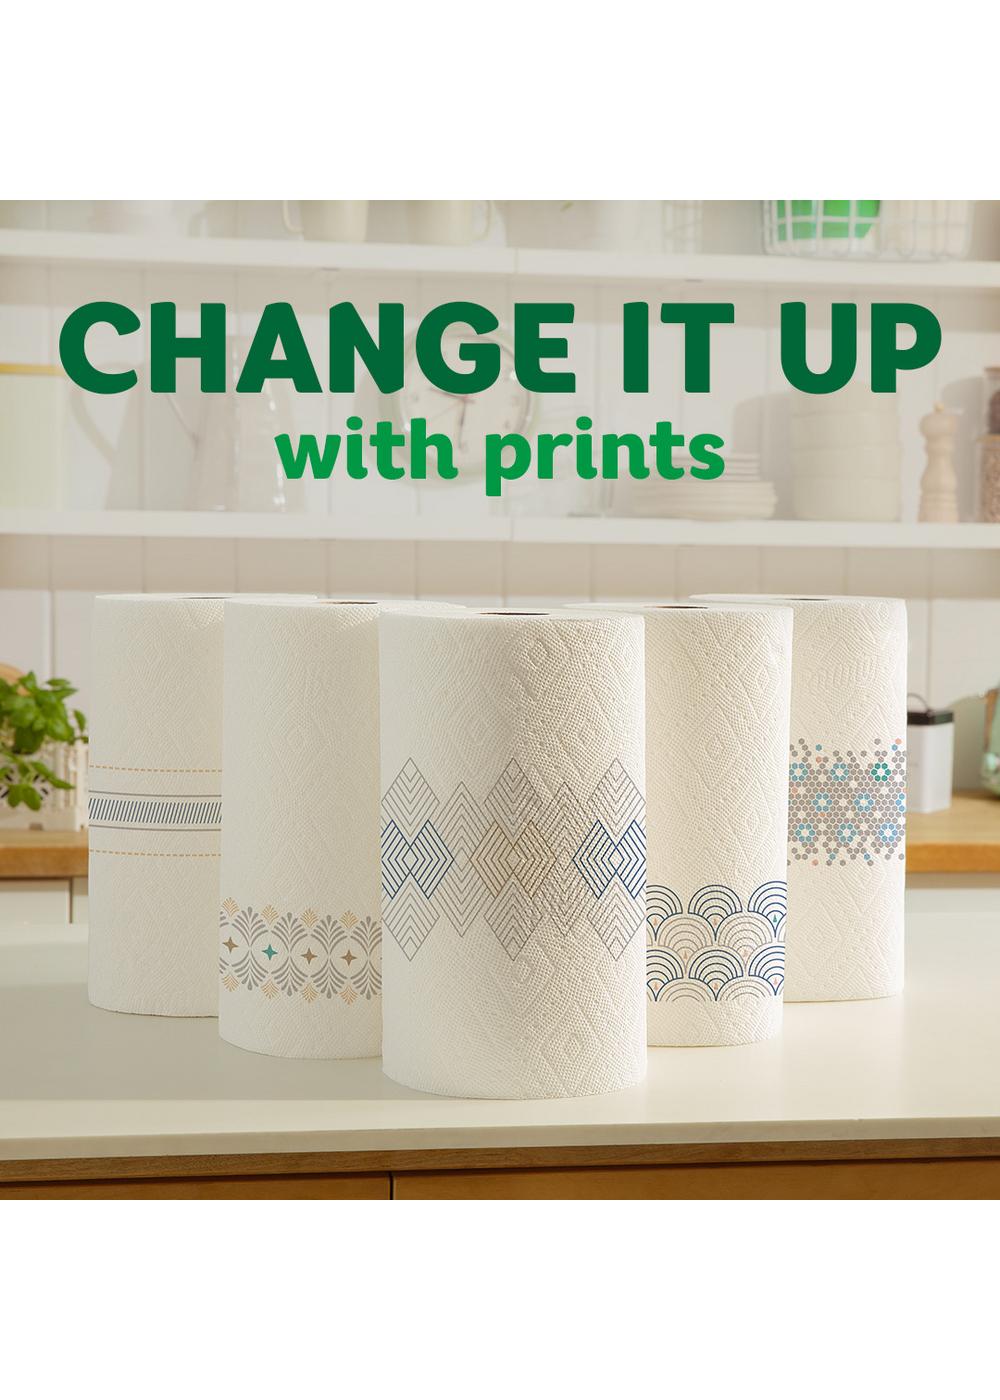 Scott Choose-A-Size Double Roll Paper Towels - Shop Paper Towels at H-E-B